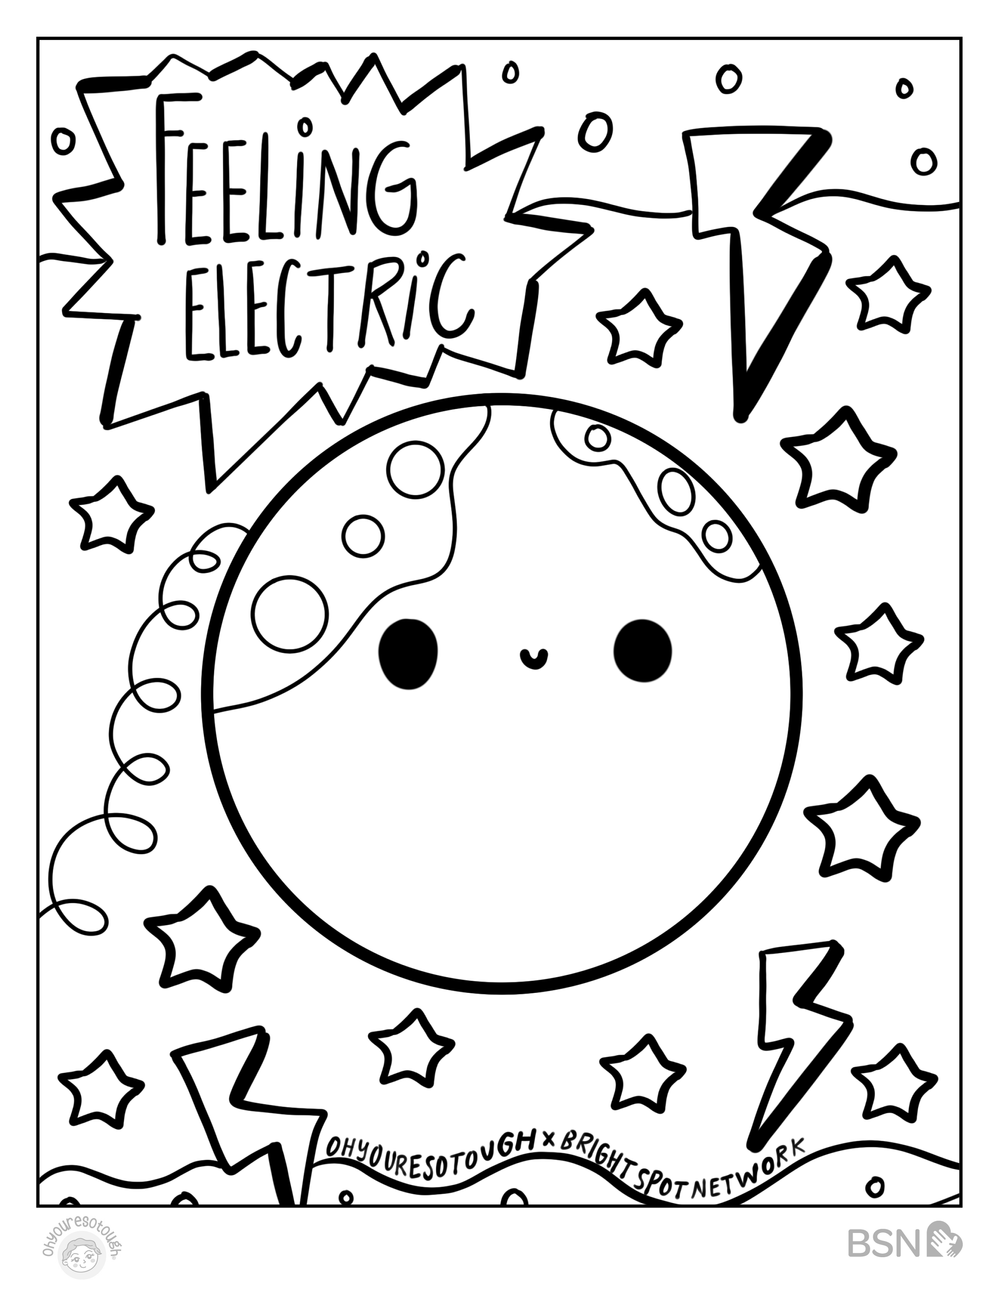 Feeling Electric